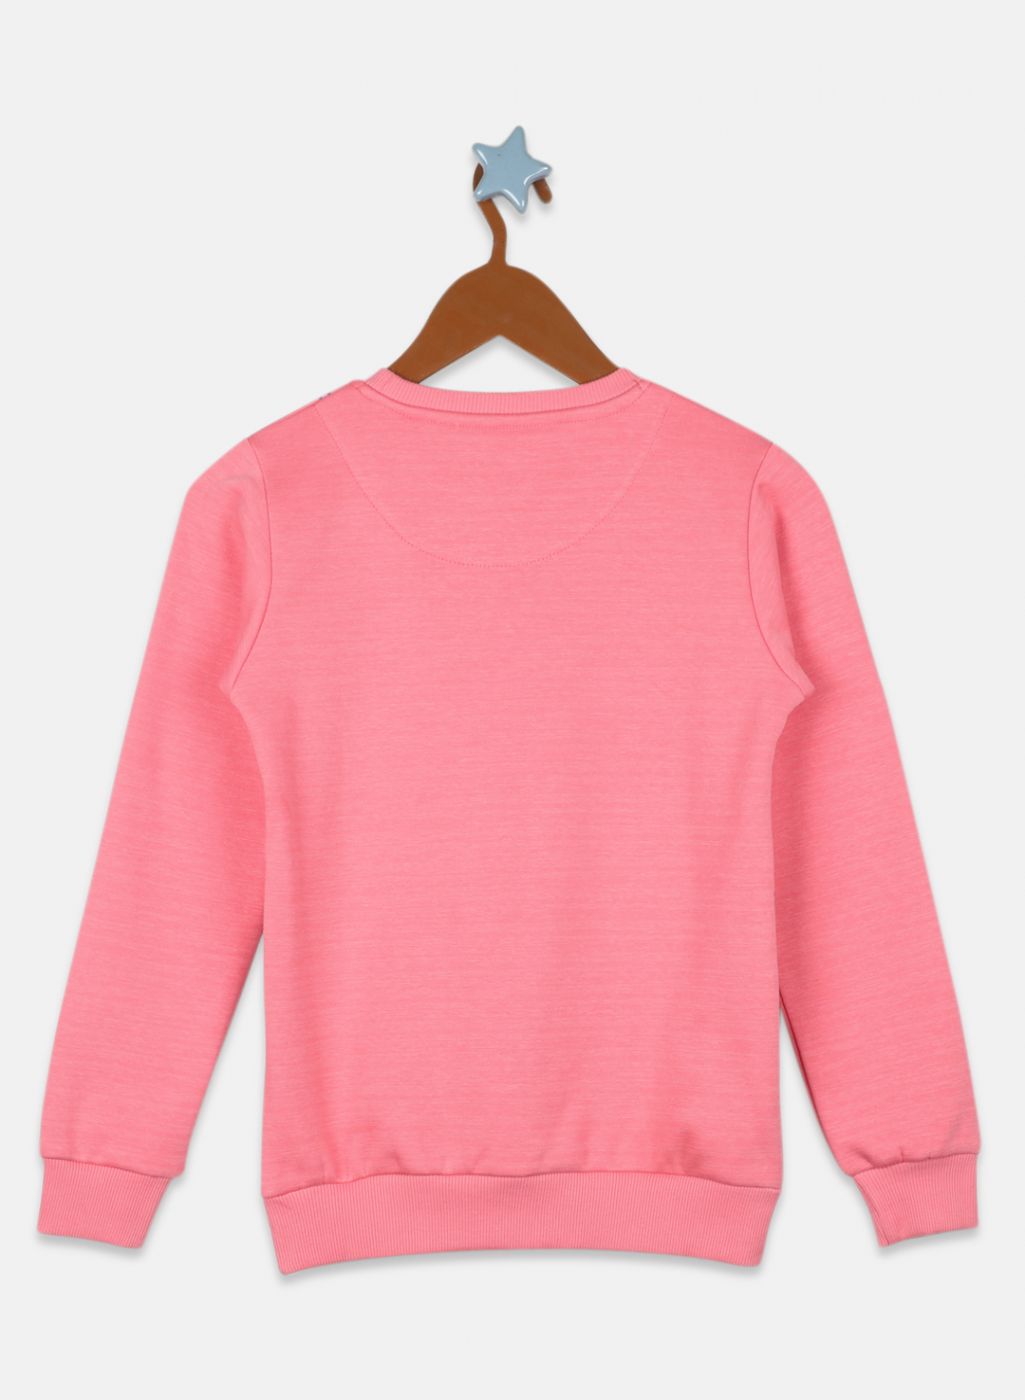 Girls Pink Printed Sweatshirt